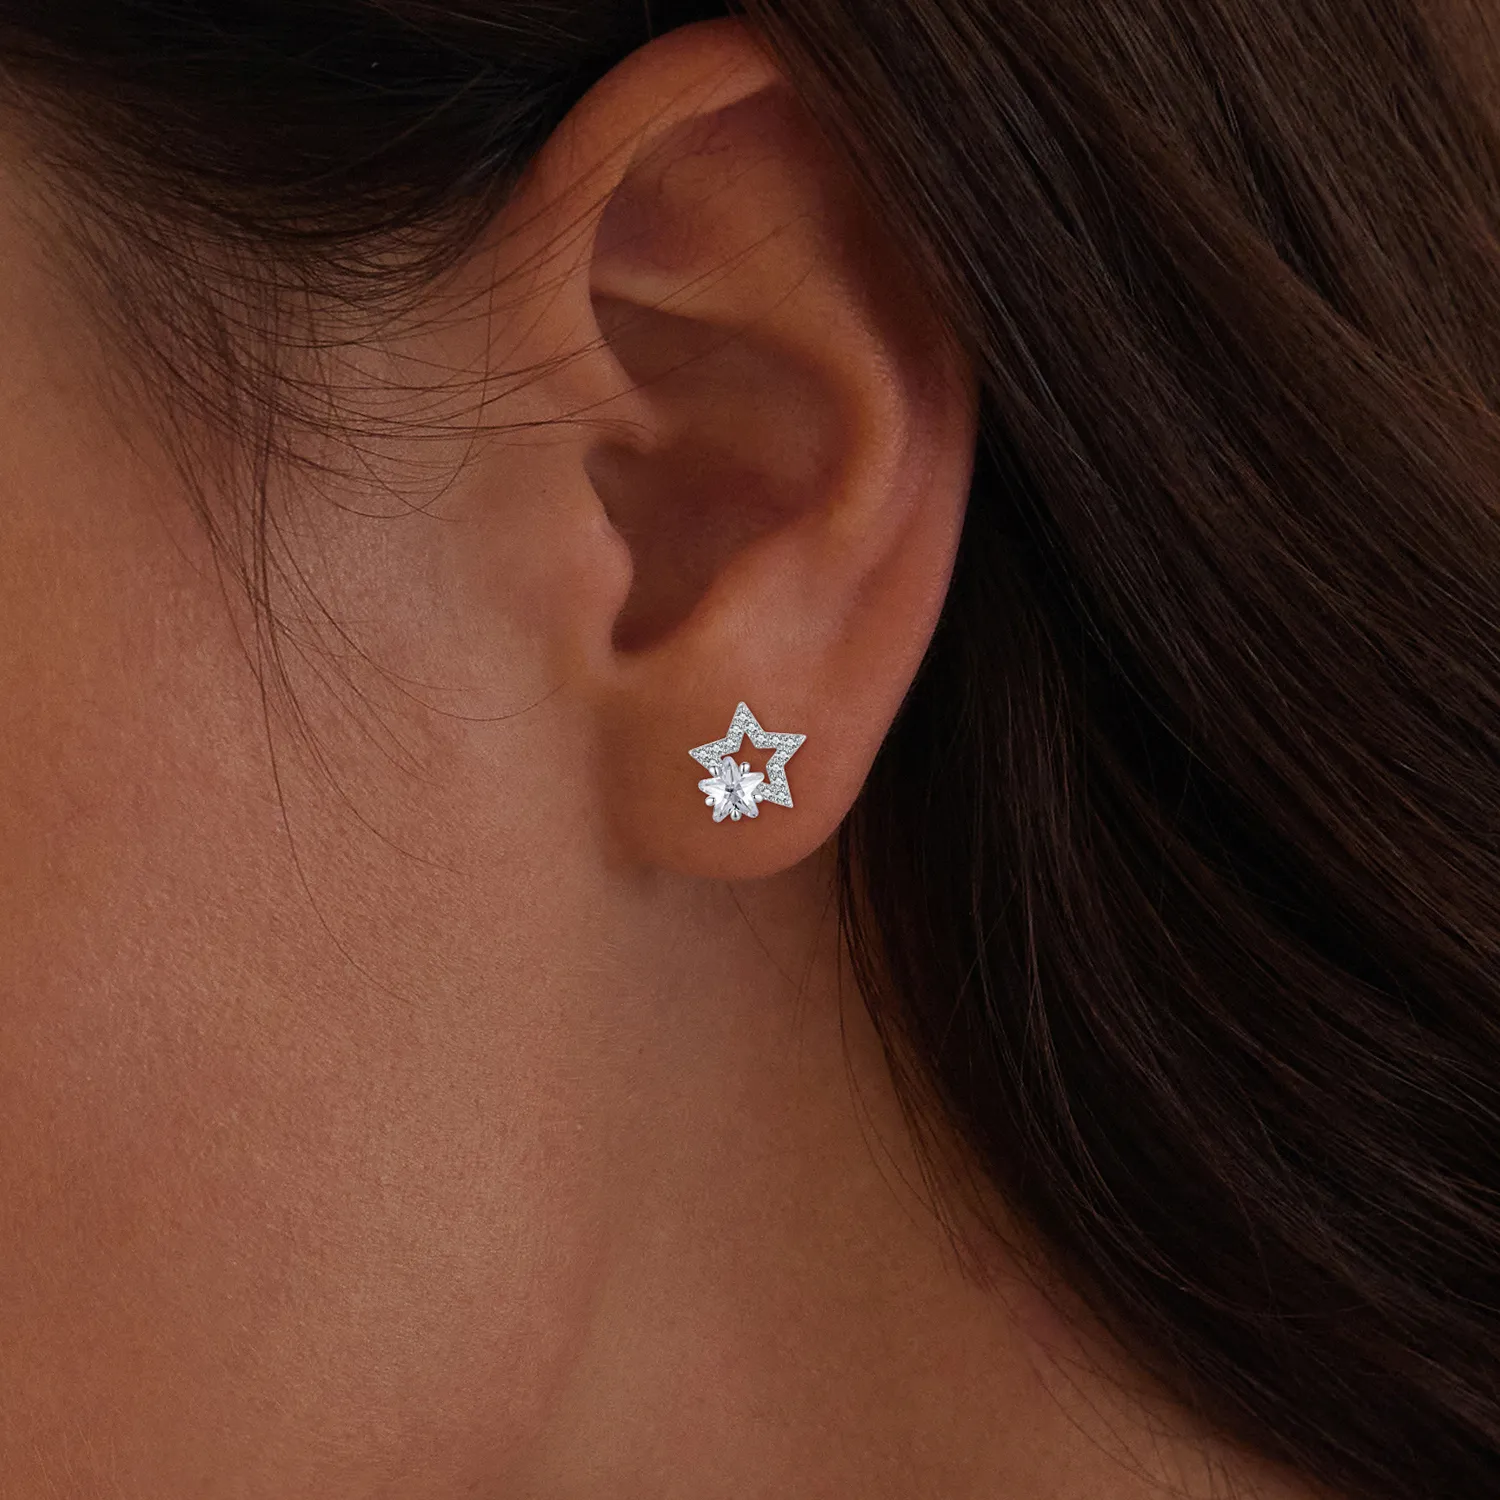 Pandora Style Star Studs Earrings - BSE878